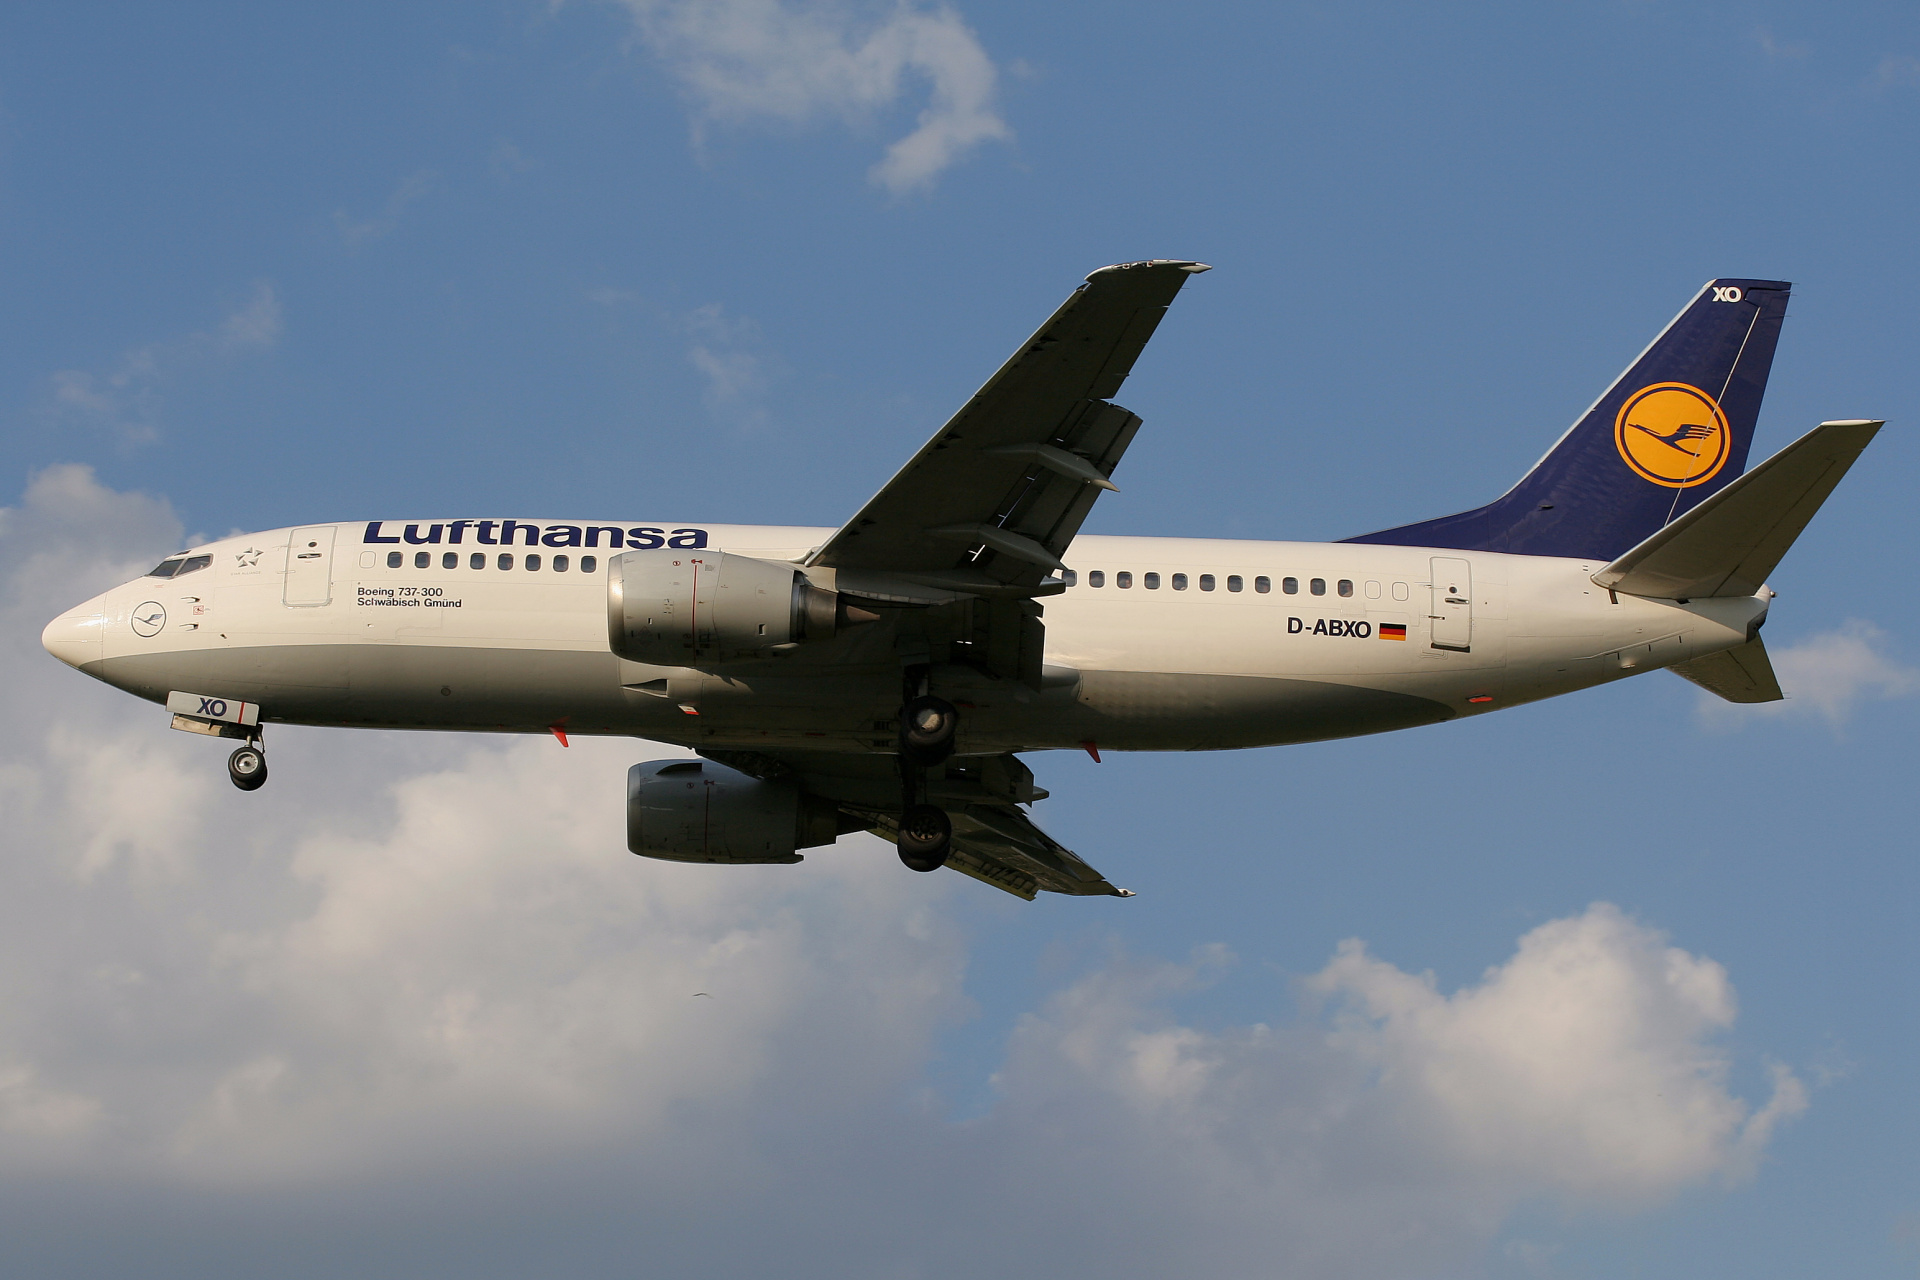 D-ABXO (Aircraft » EPWA Spotting » Boeing 737-300 » Lufthansa)